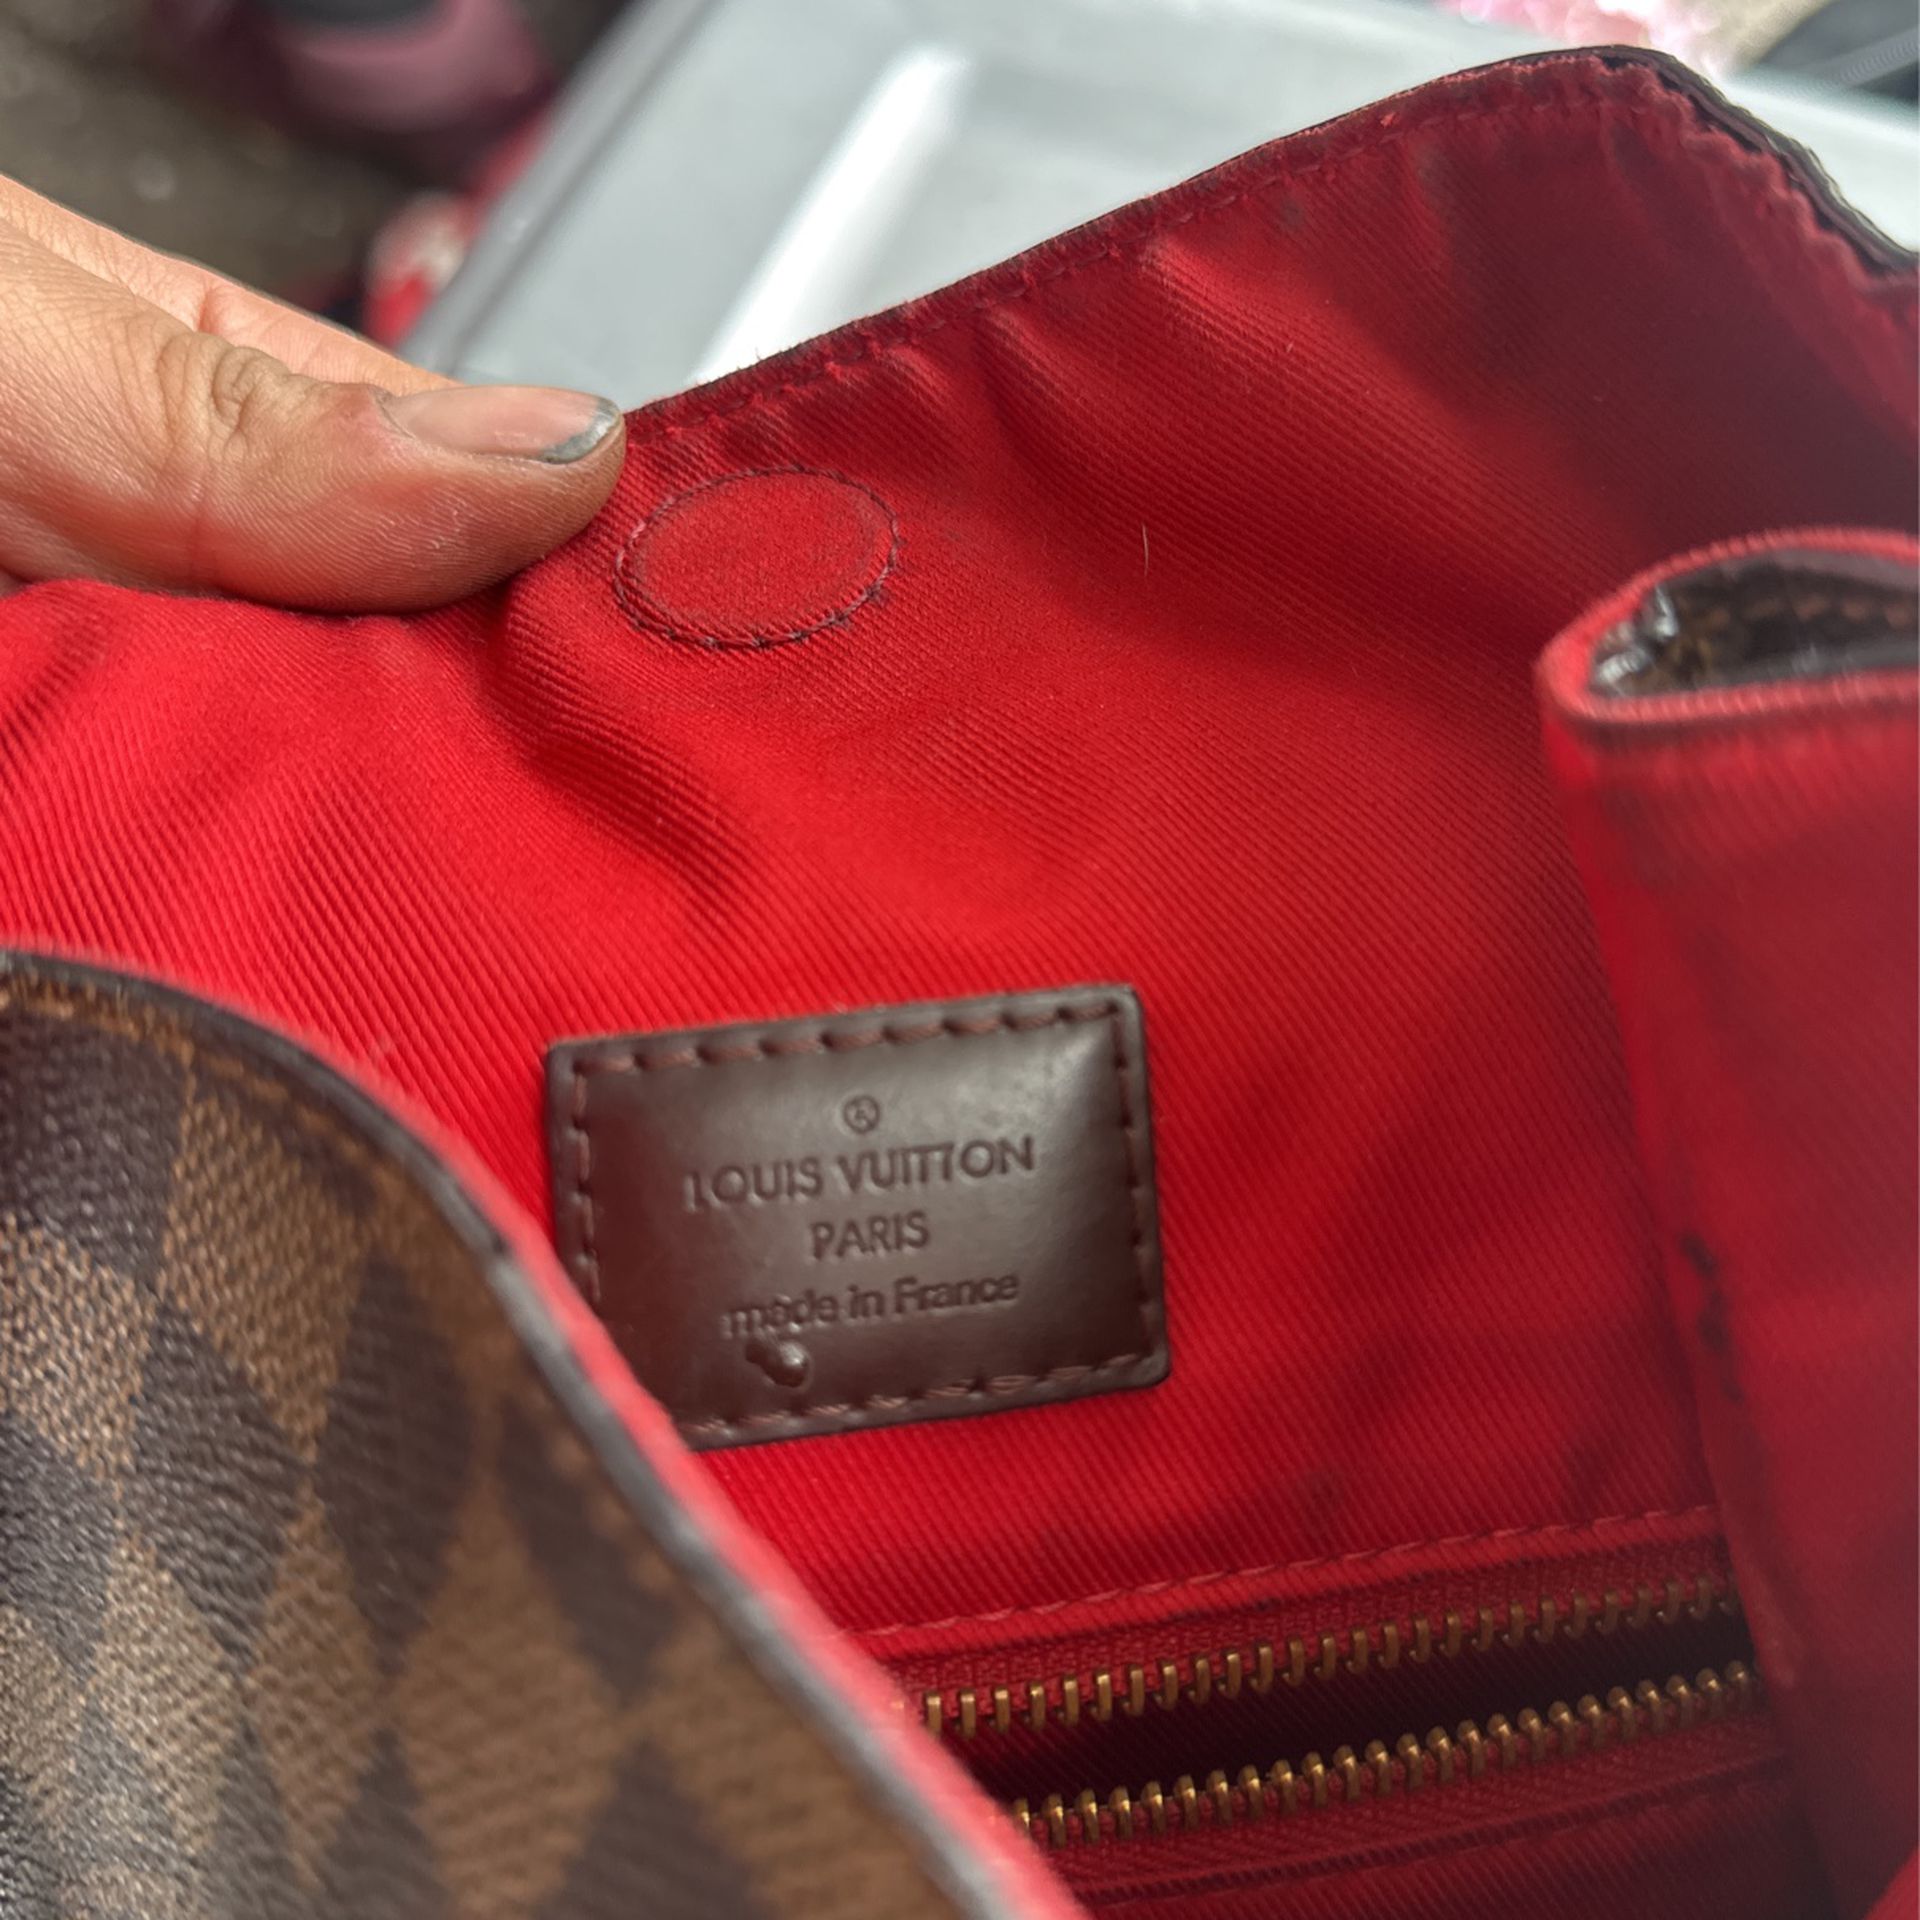 Louis Vuitton Graceful PM ORIGINAL for Sale in Ontario, CA - OfferUp